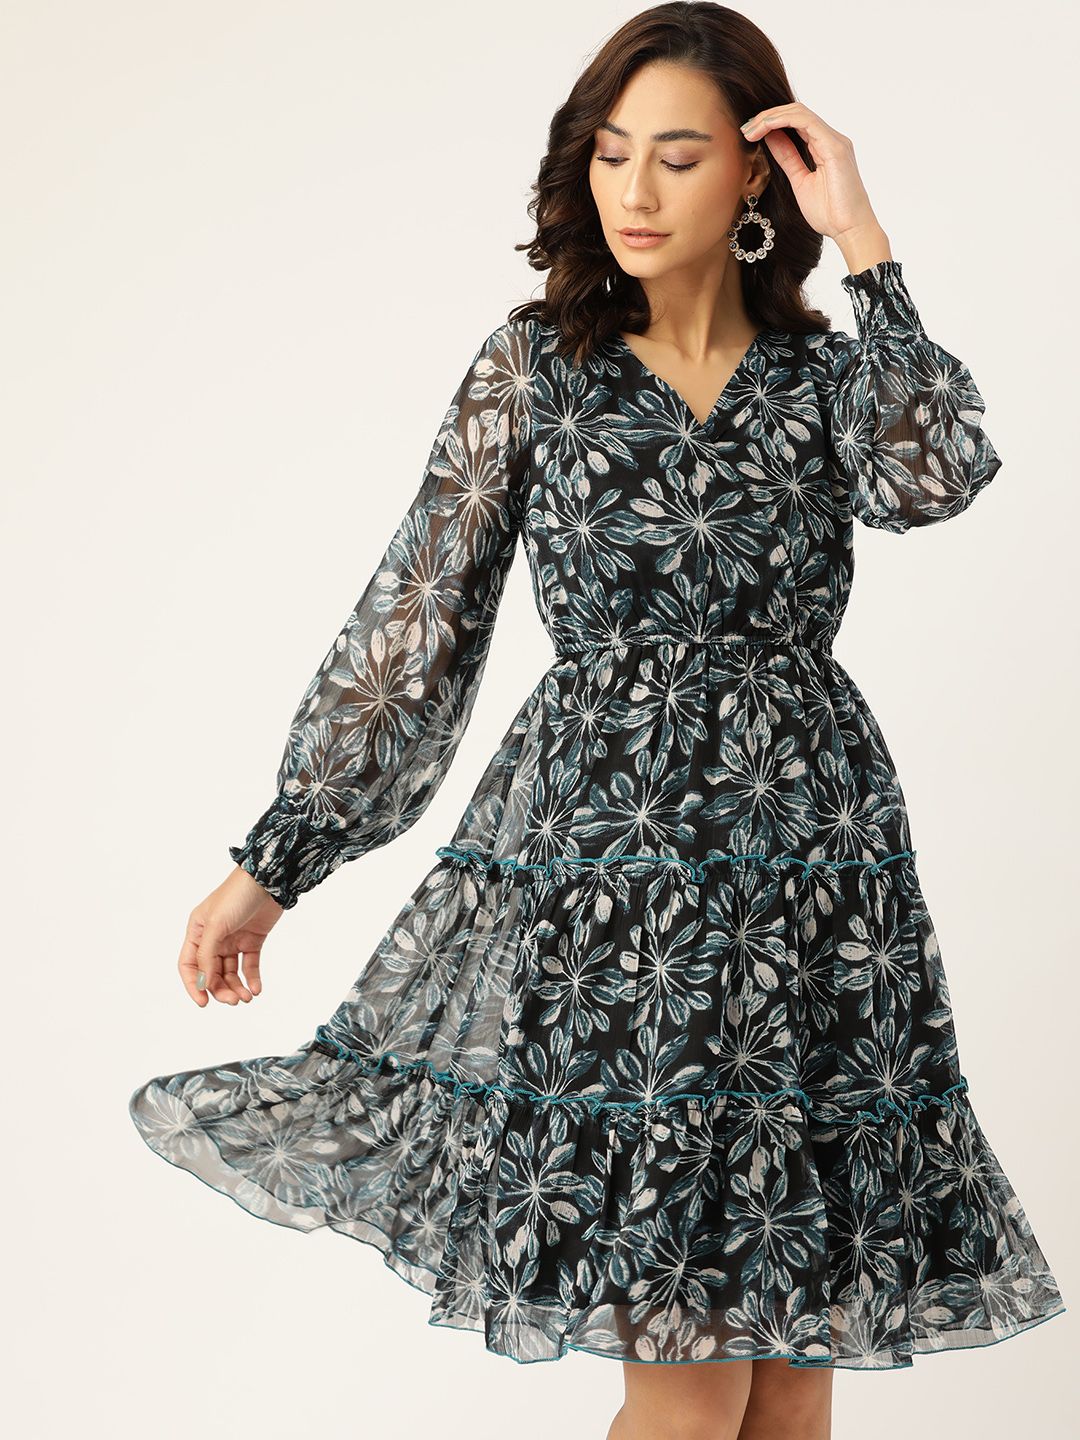 Antheaa Black & Blue Floral Chiffon Midi Dress Price in India